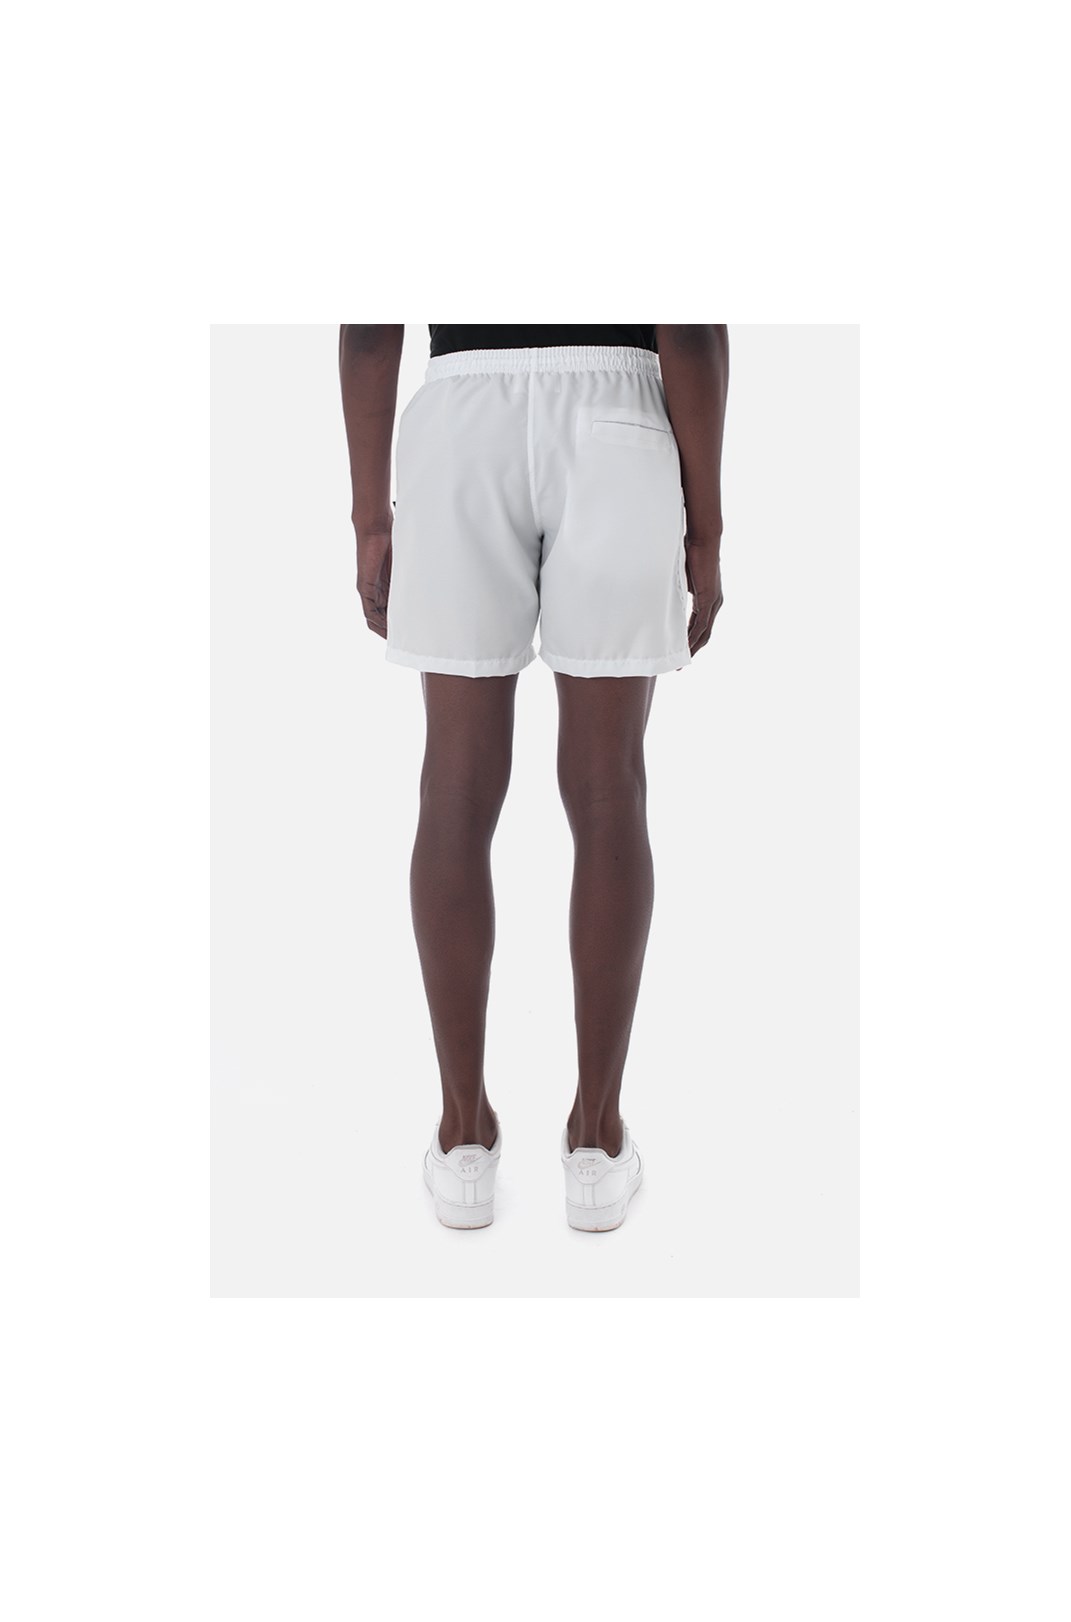 Shorts Approve Yrslf Branco